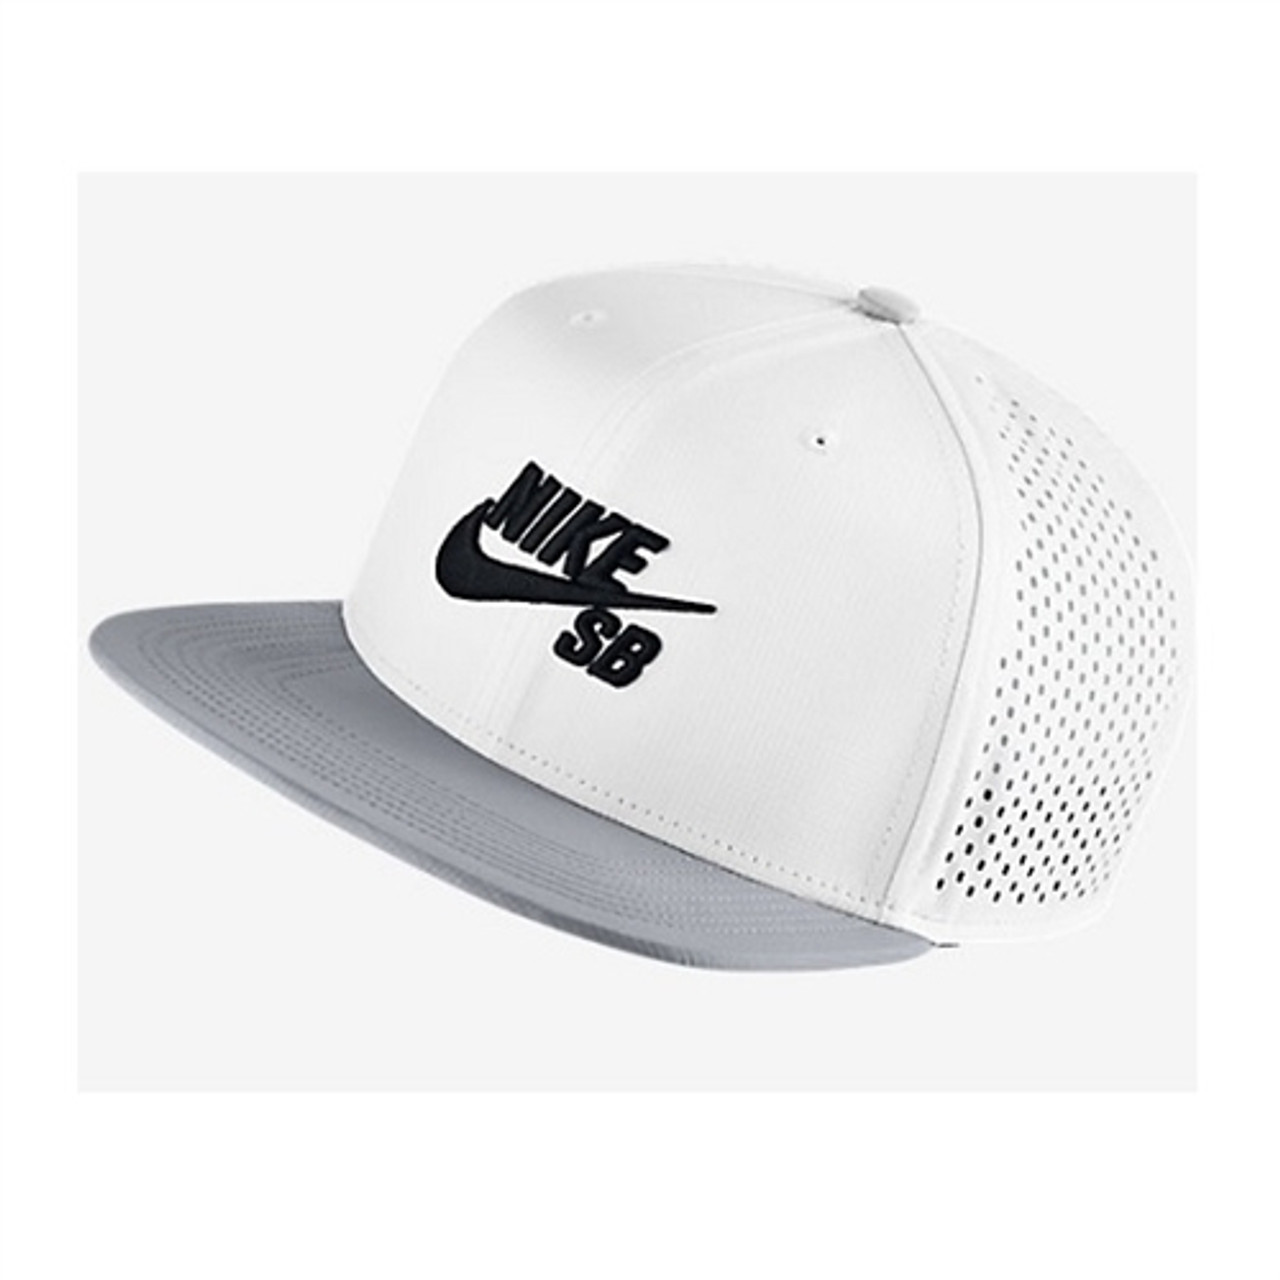 Sb Performance Pro Trucker Hat White Grey Snapback | Boardparadise.com